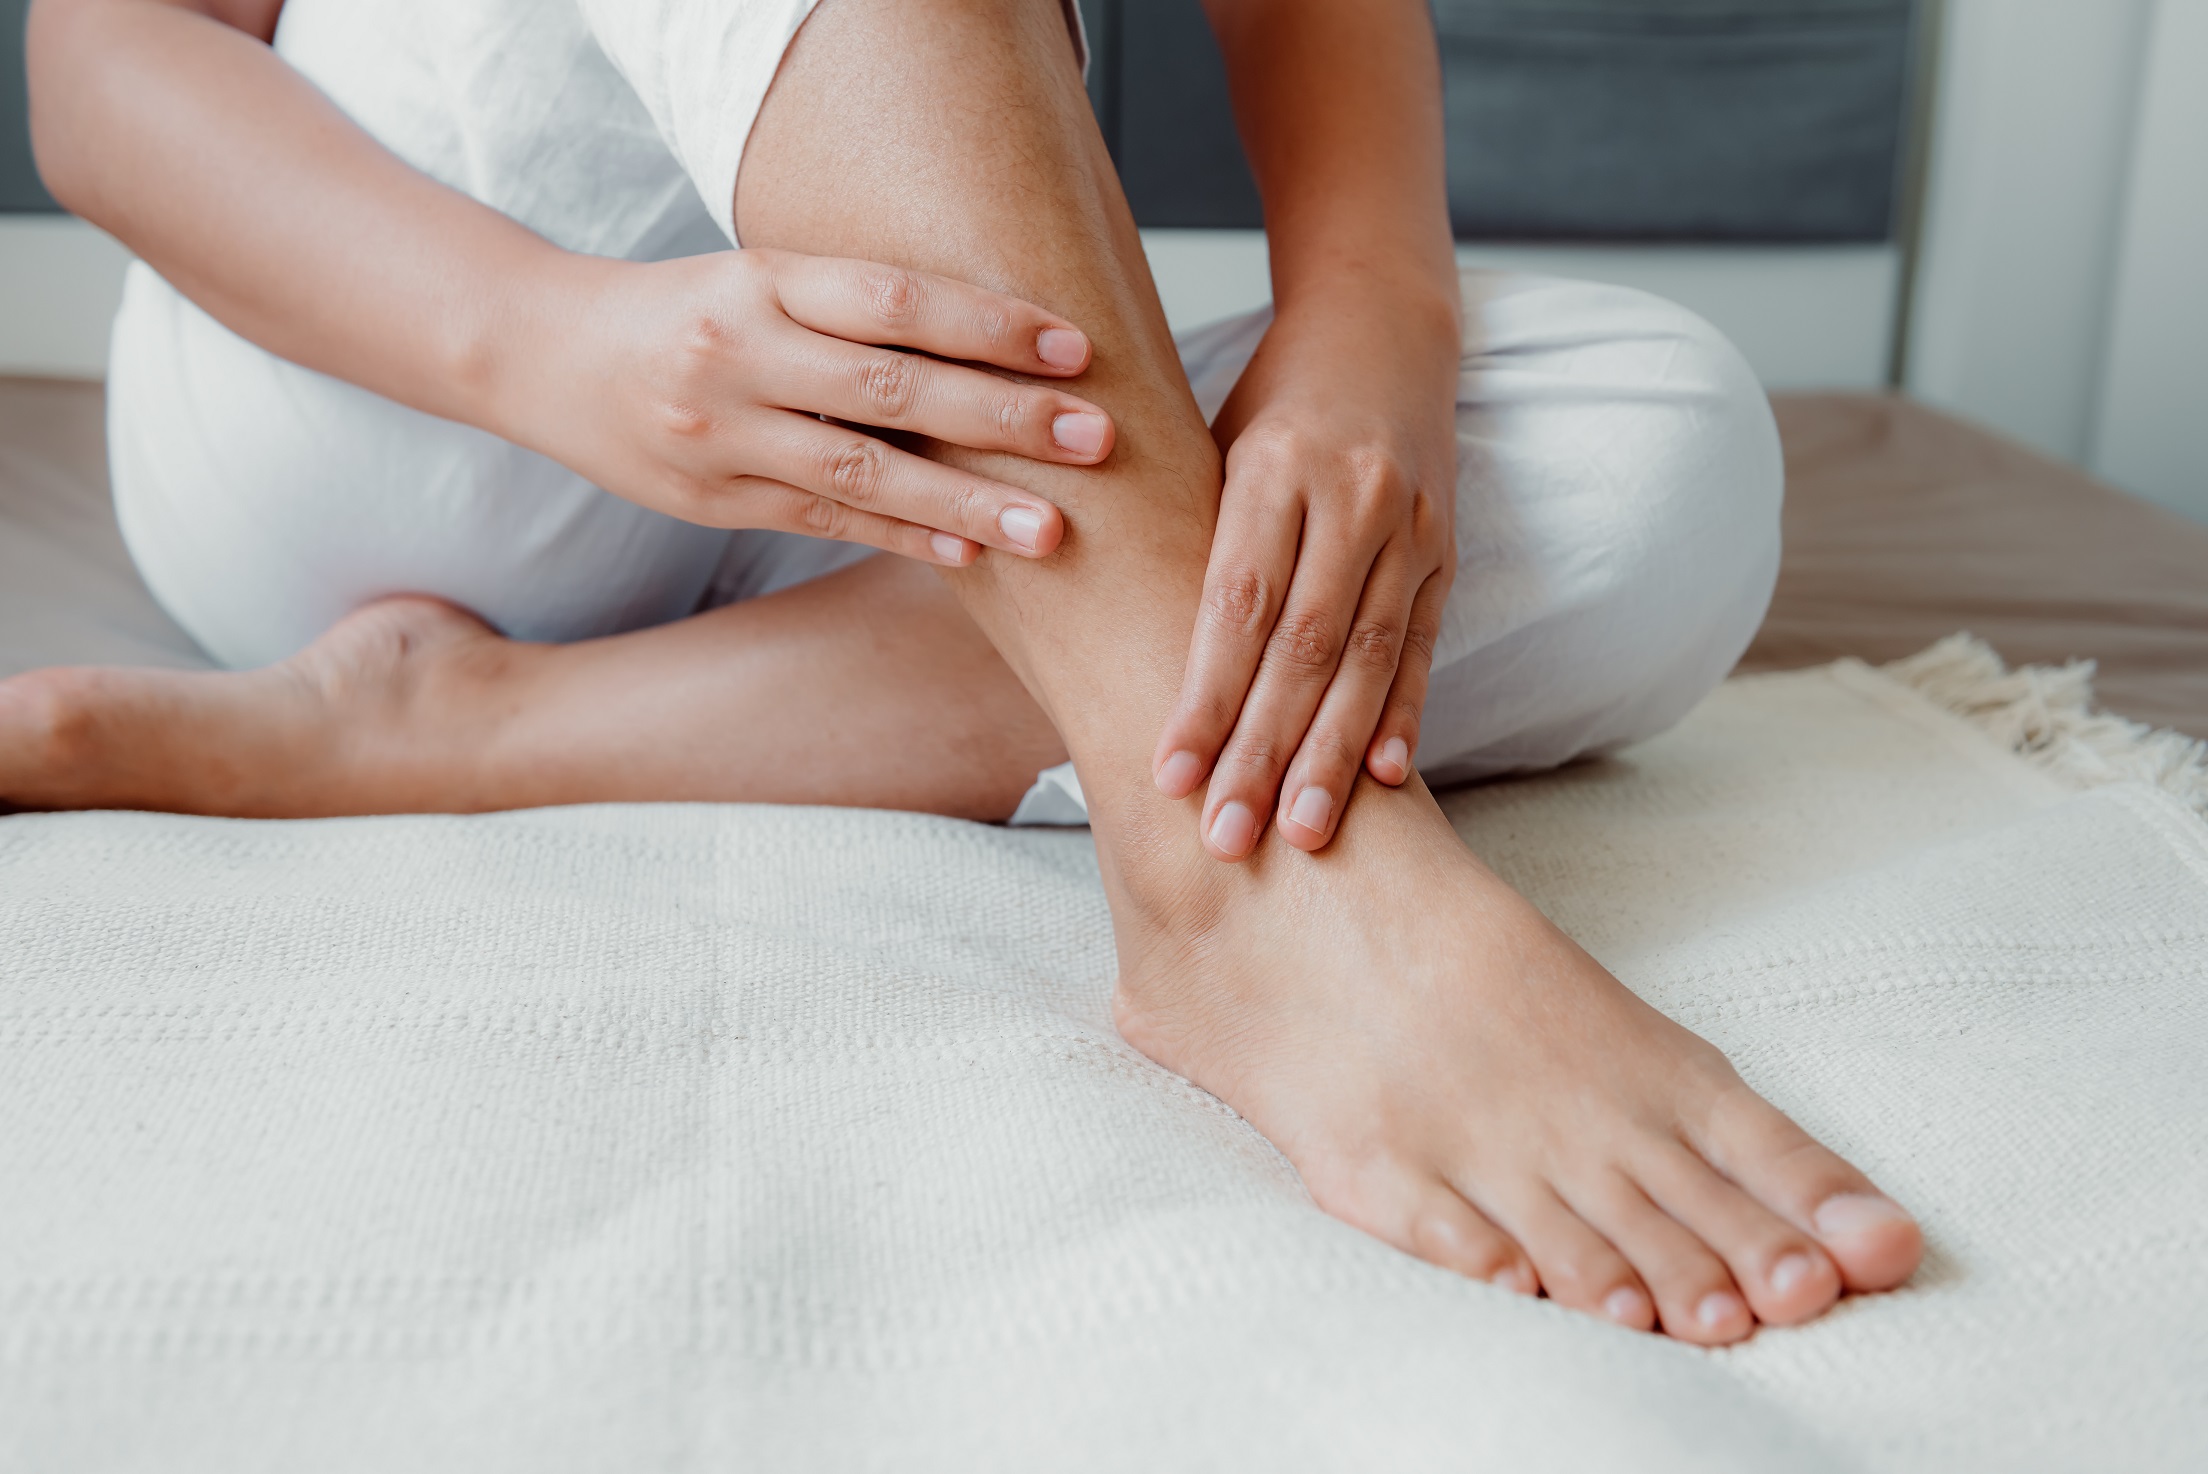 Opuchnięte kostki nóg – skąd się biorą?